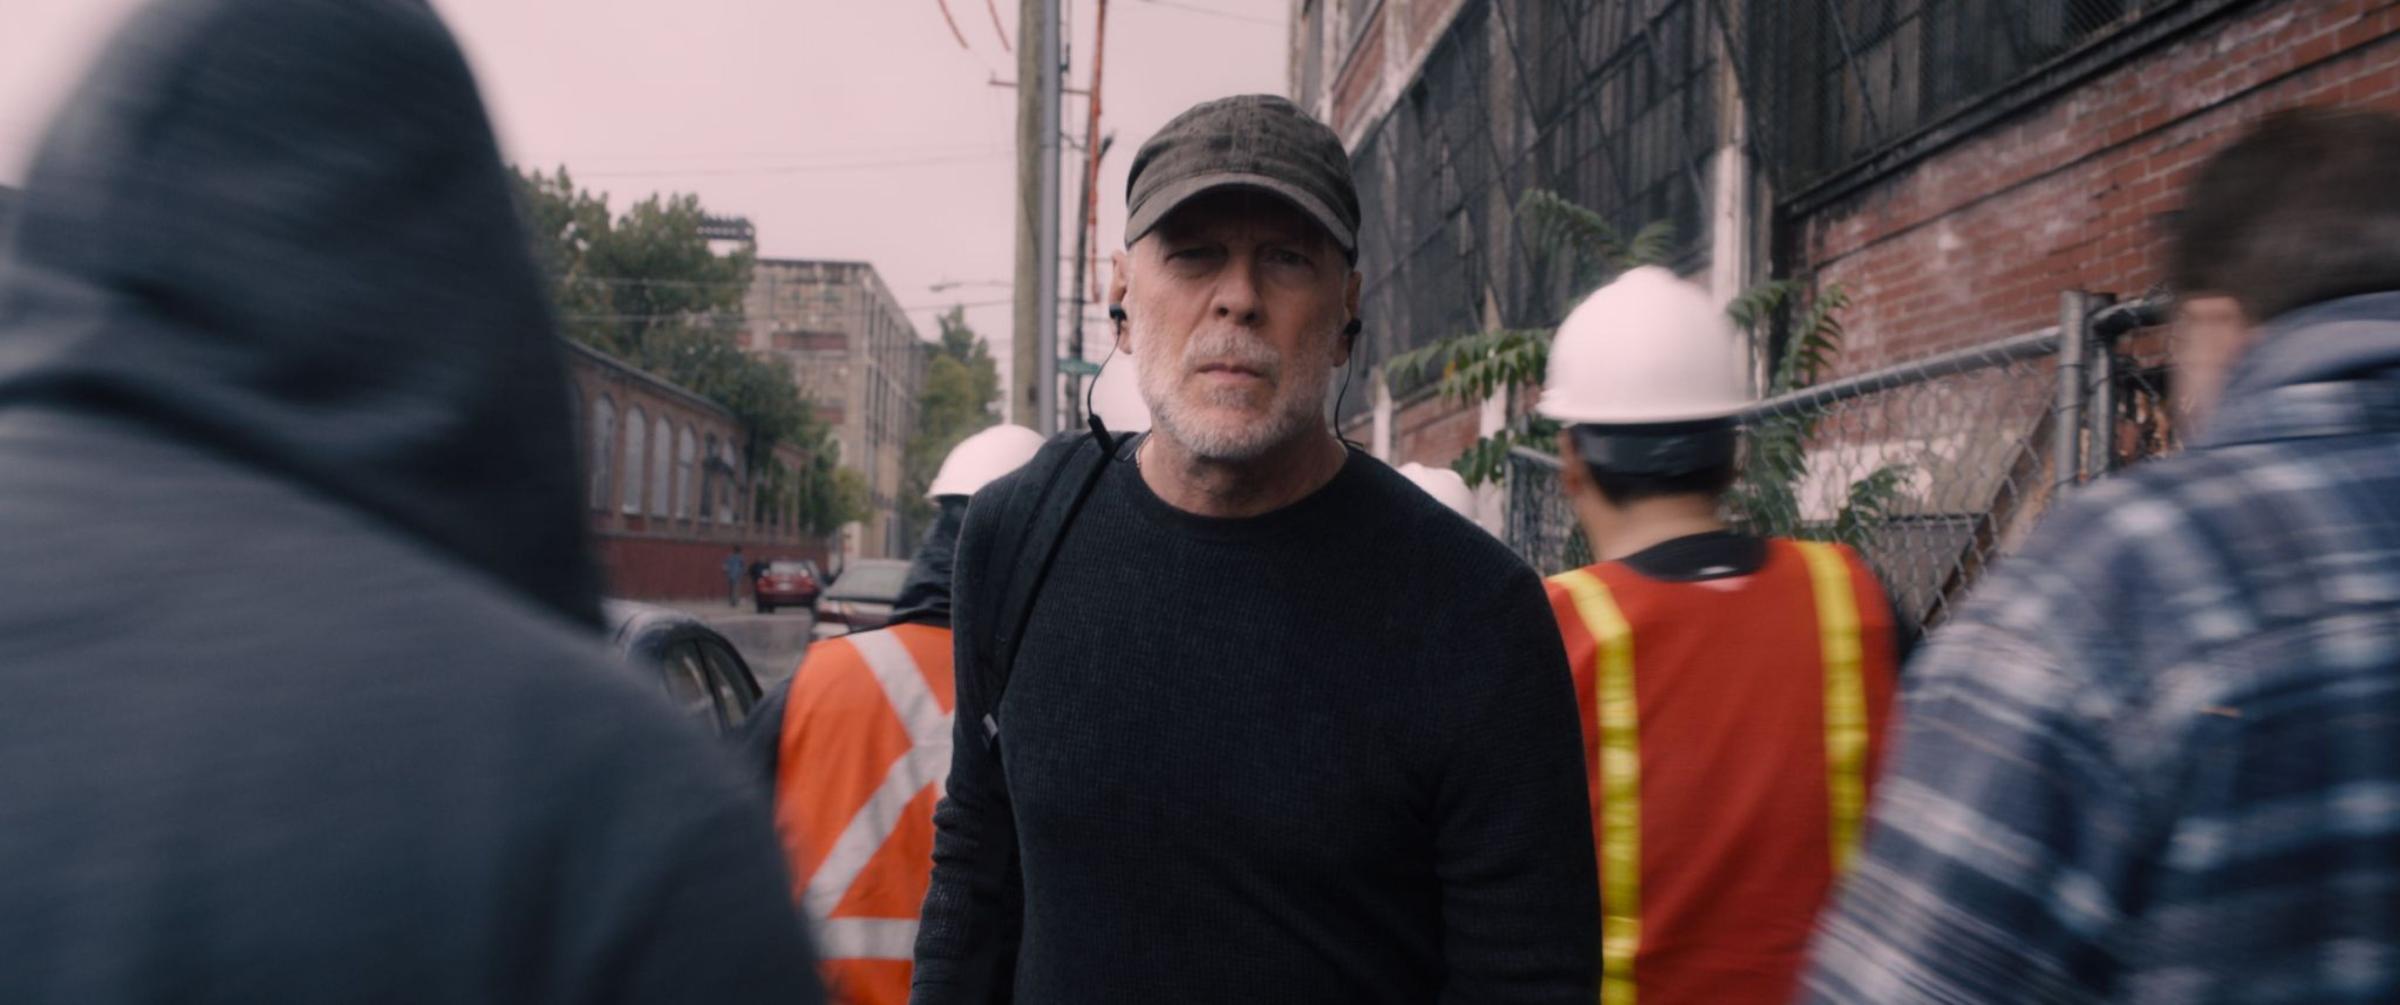 Bruce Willis as David in 'Glass'